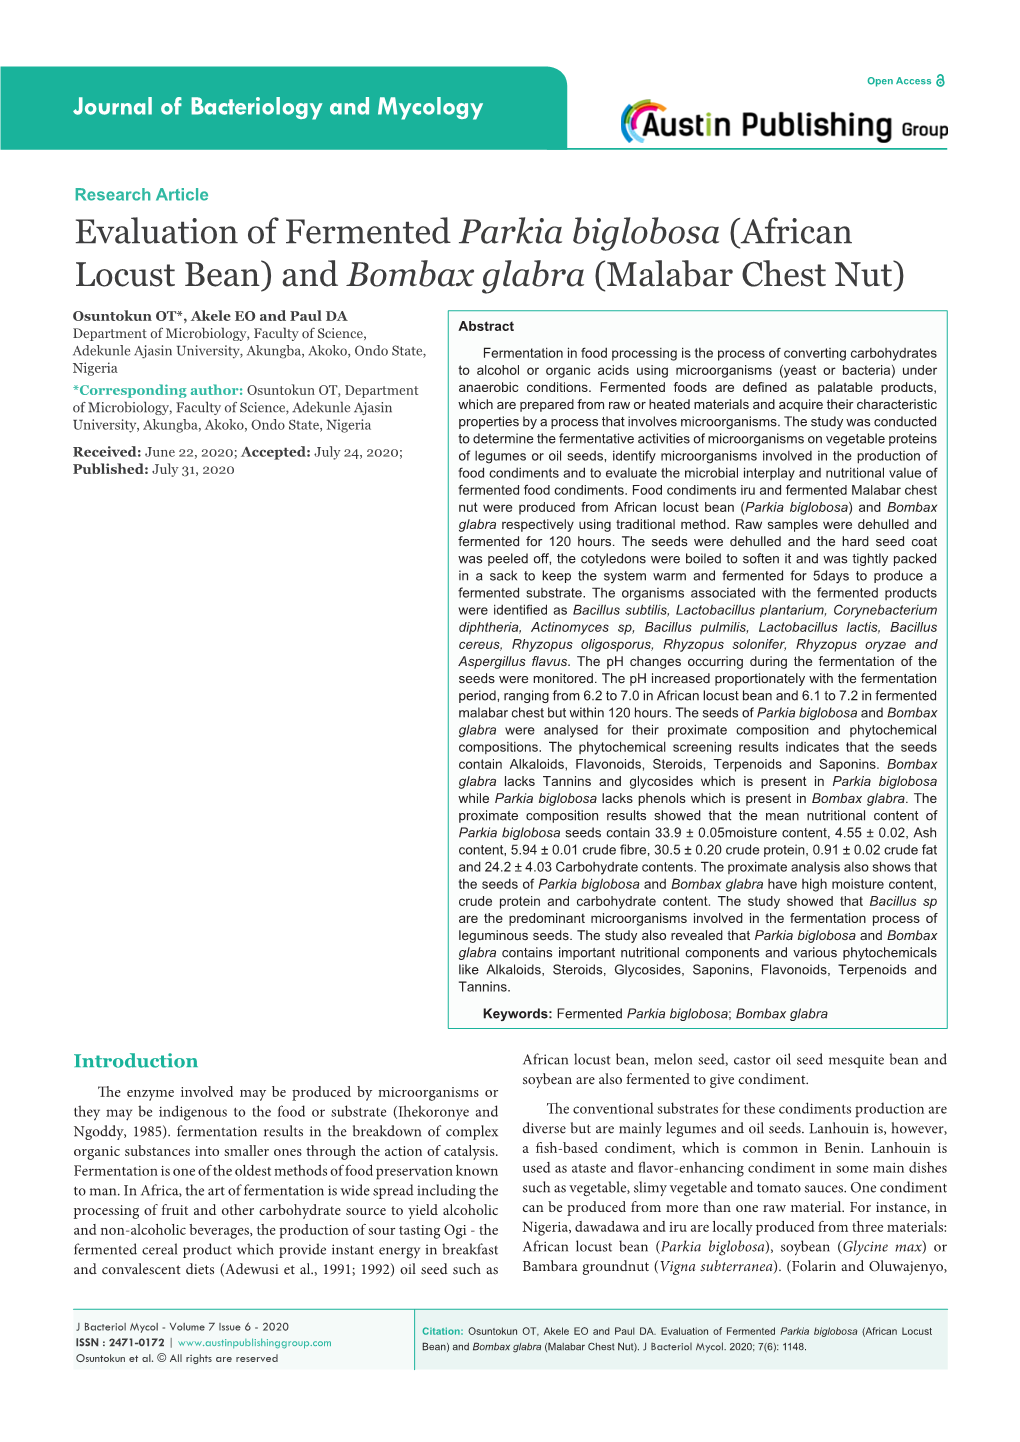 Evaluation of Fermented Parkia Biglobosa (African Locust Bean) and Bombax Glabra (Malabar Chest Nut)